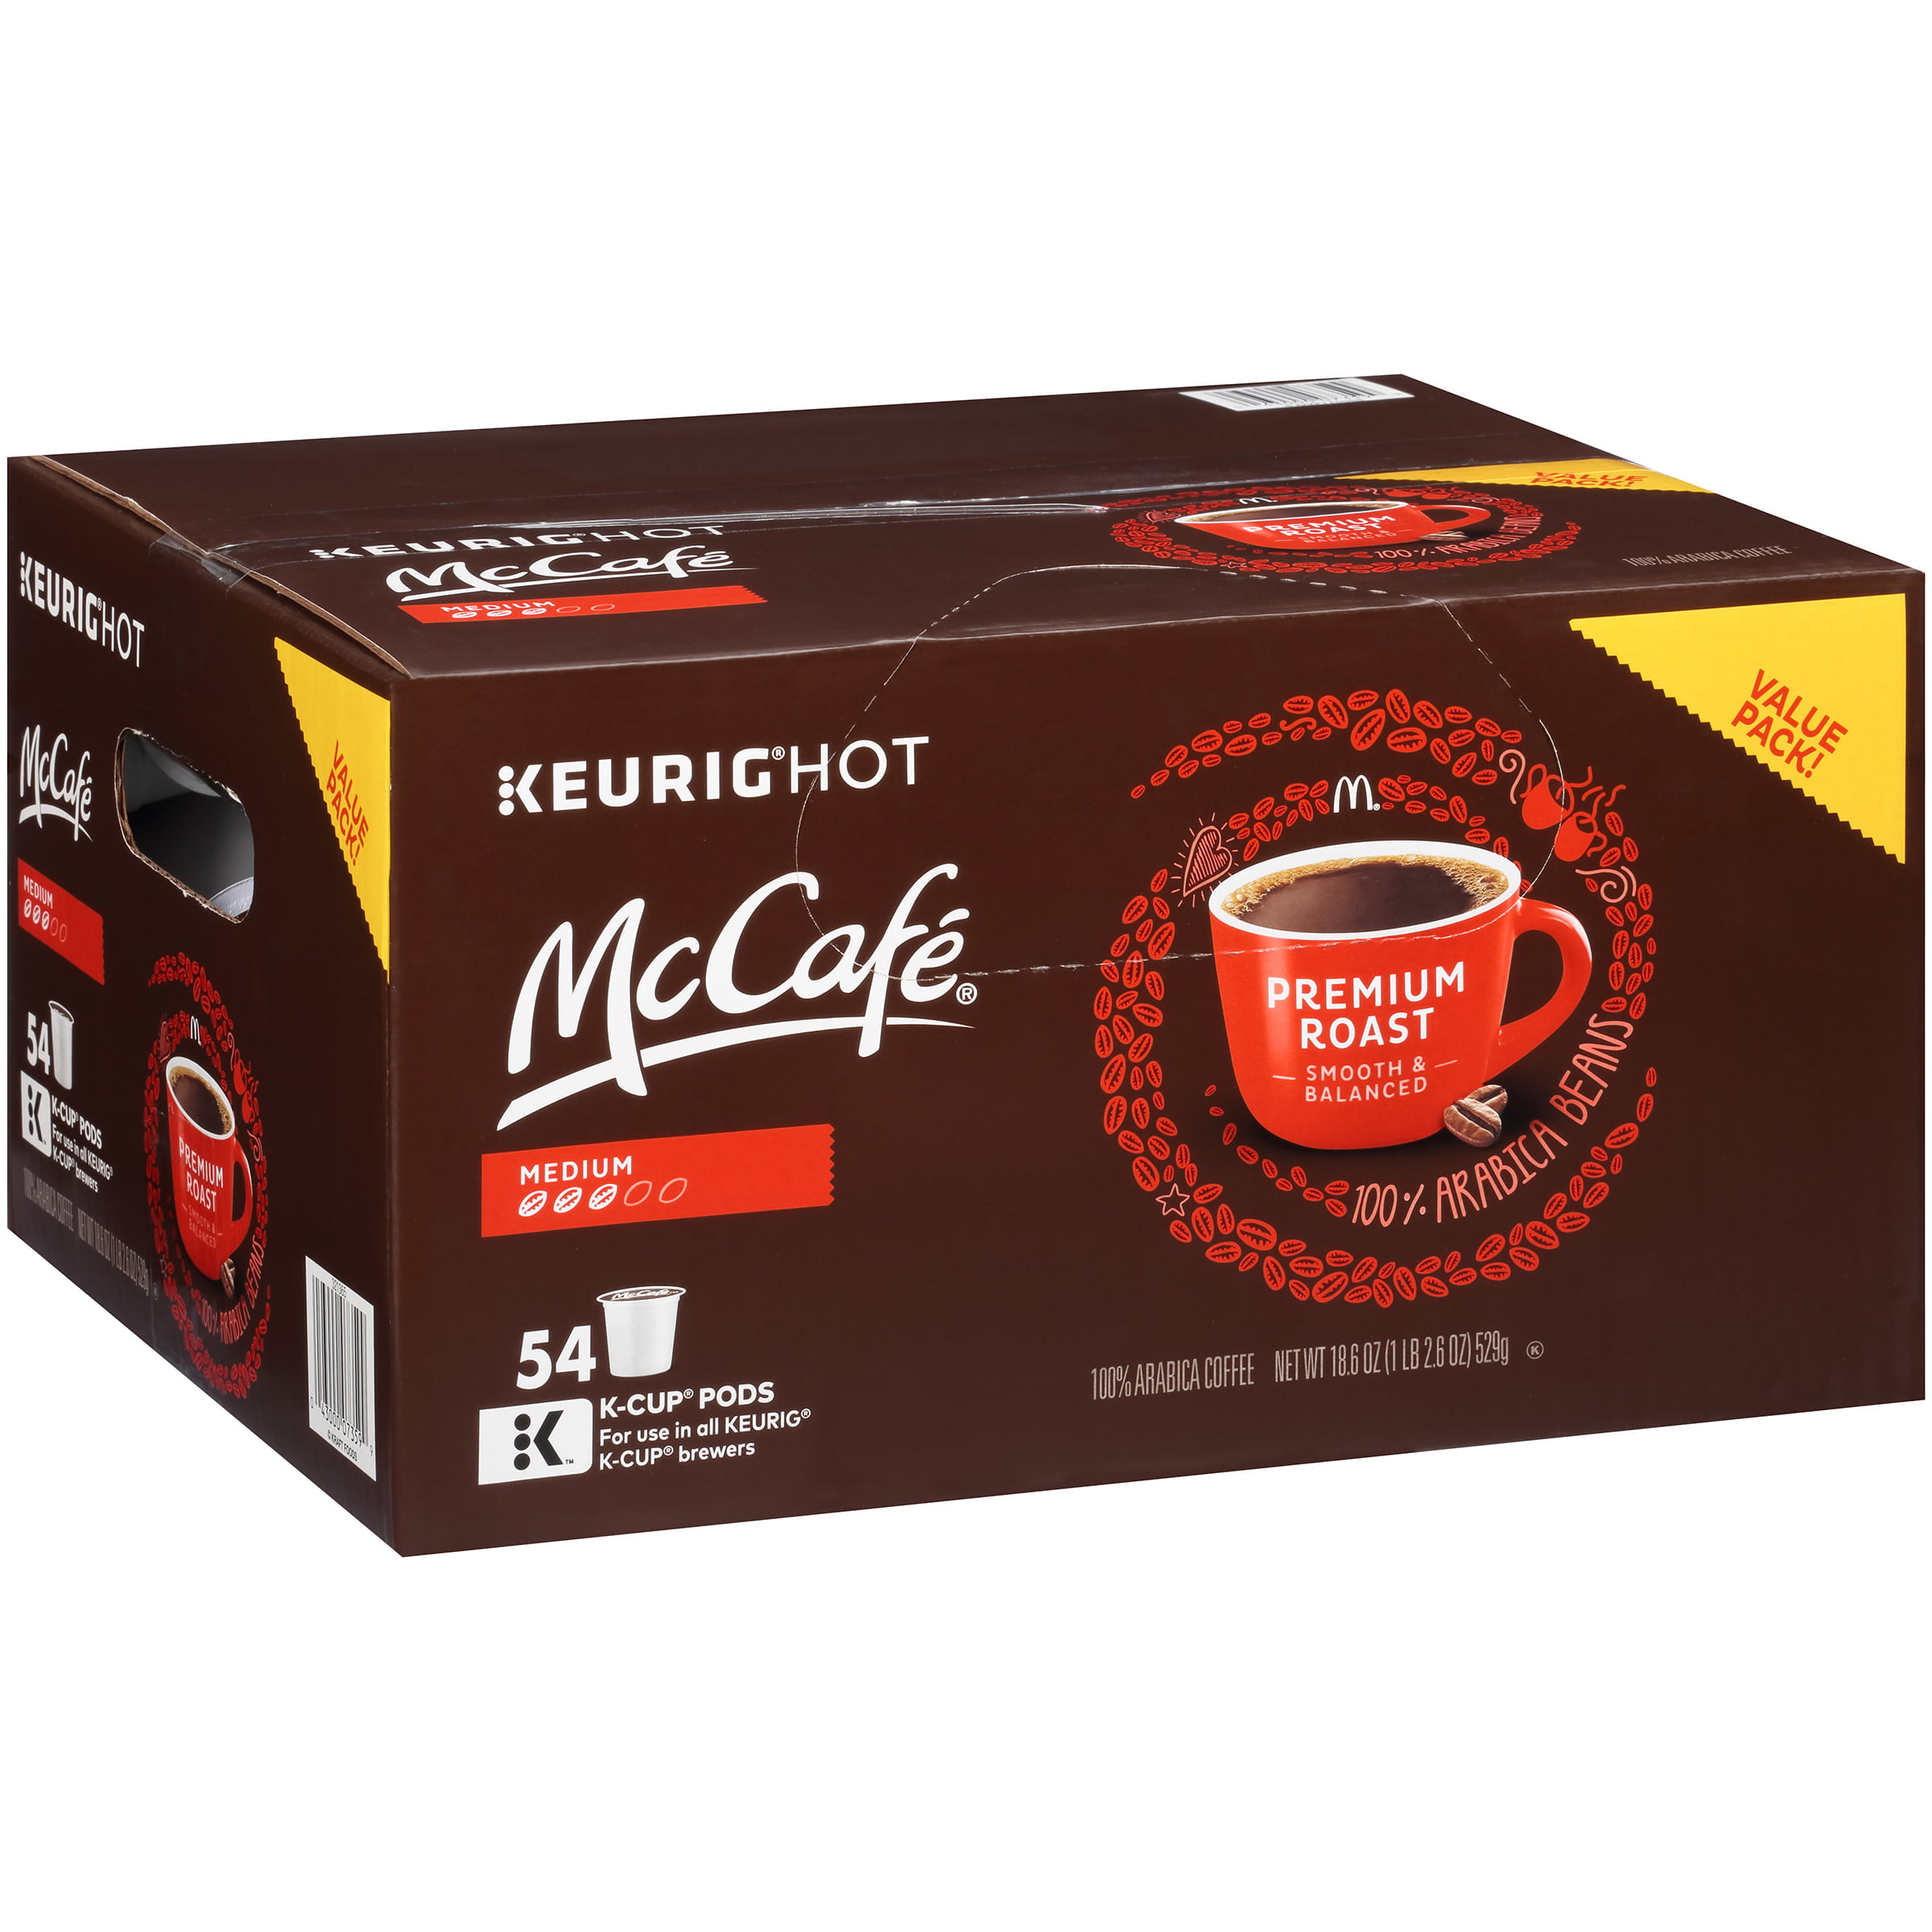 Mccafe Premium Roast Medium Coffee K Cup Pods 54 Ct 18 6 Oz Box Walmart Com Walmart Com